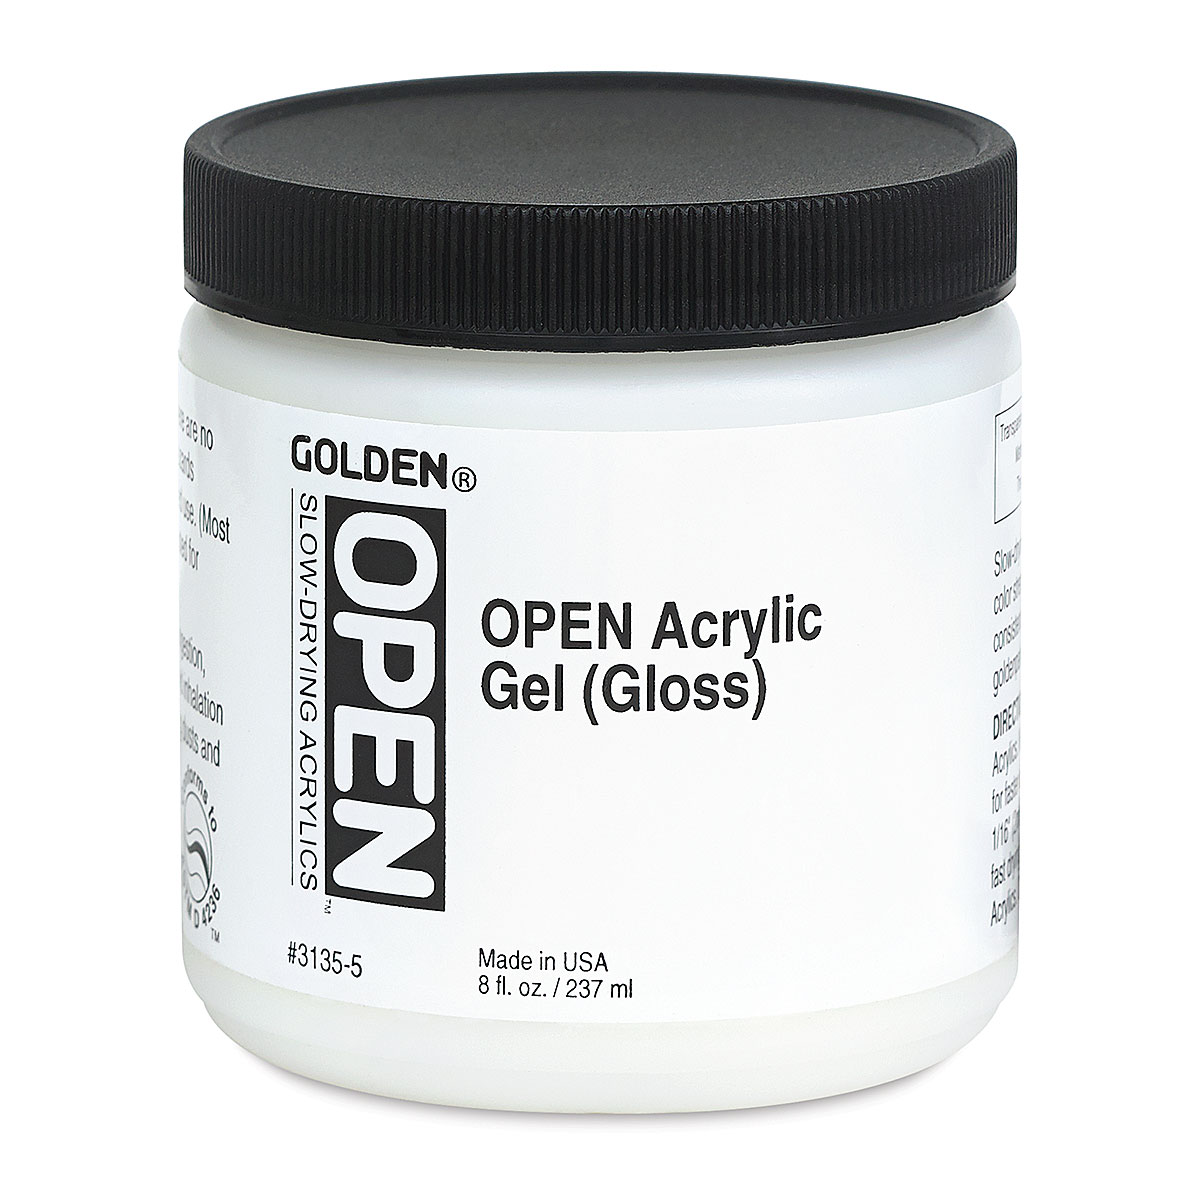 Acrylics: Golden Open Acrylics (review)